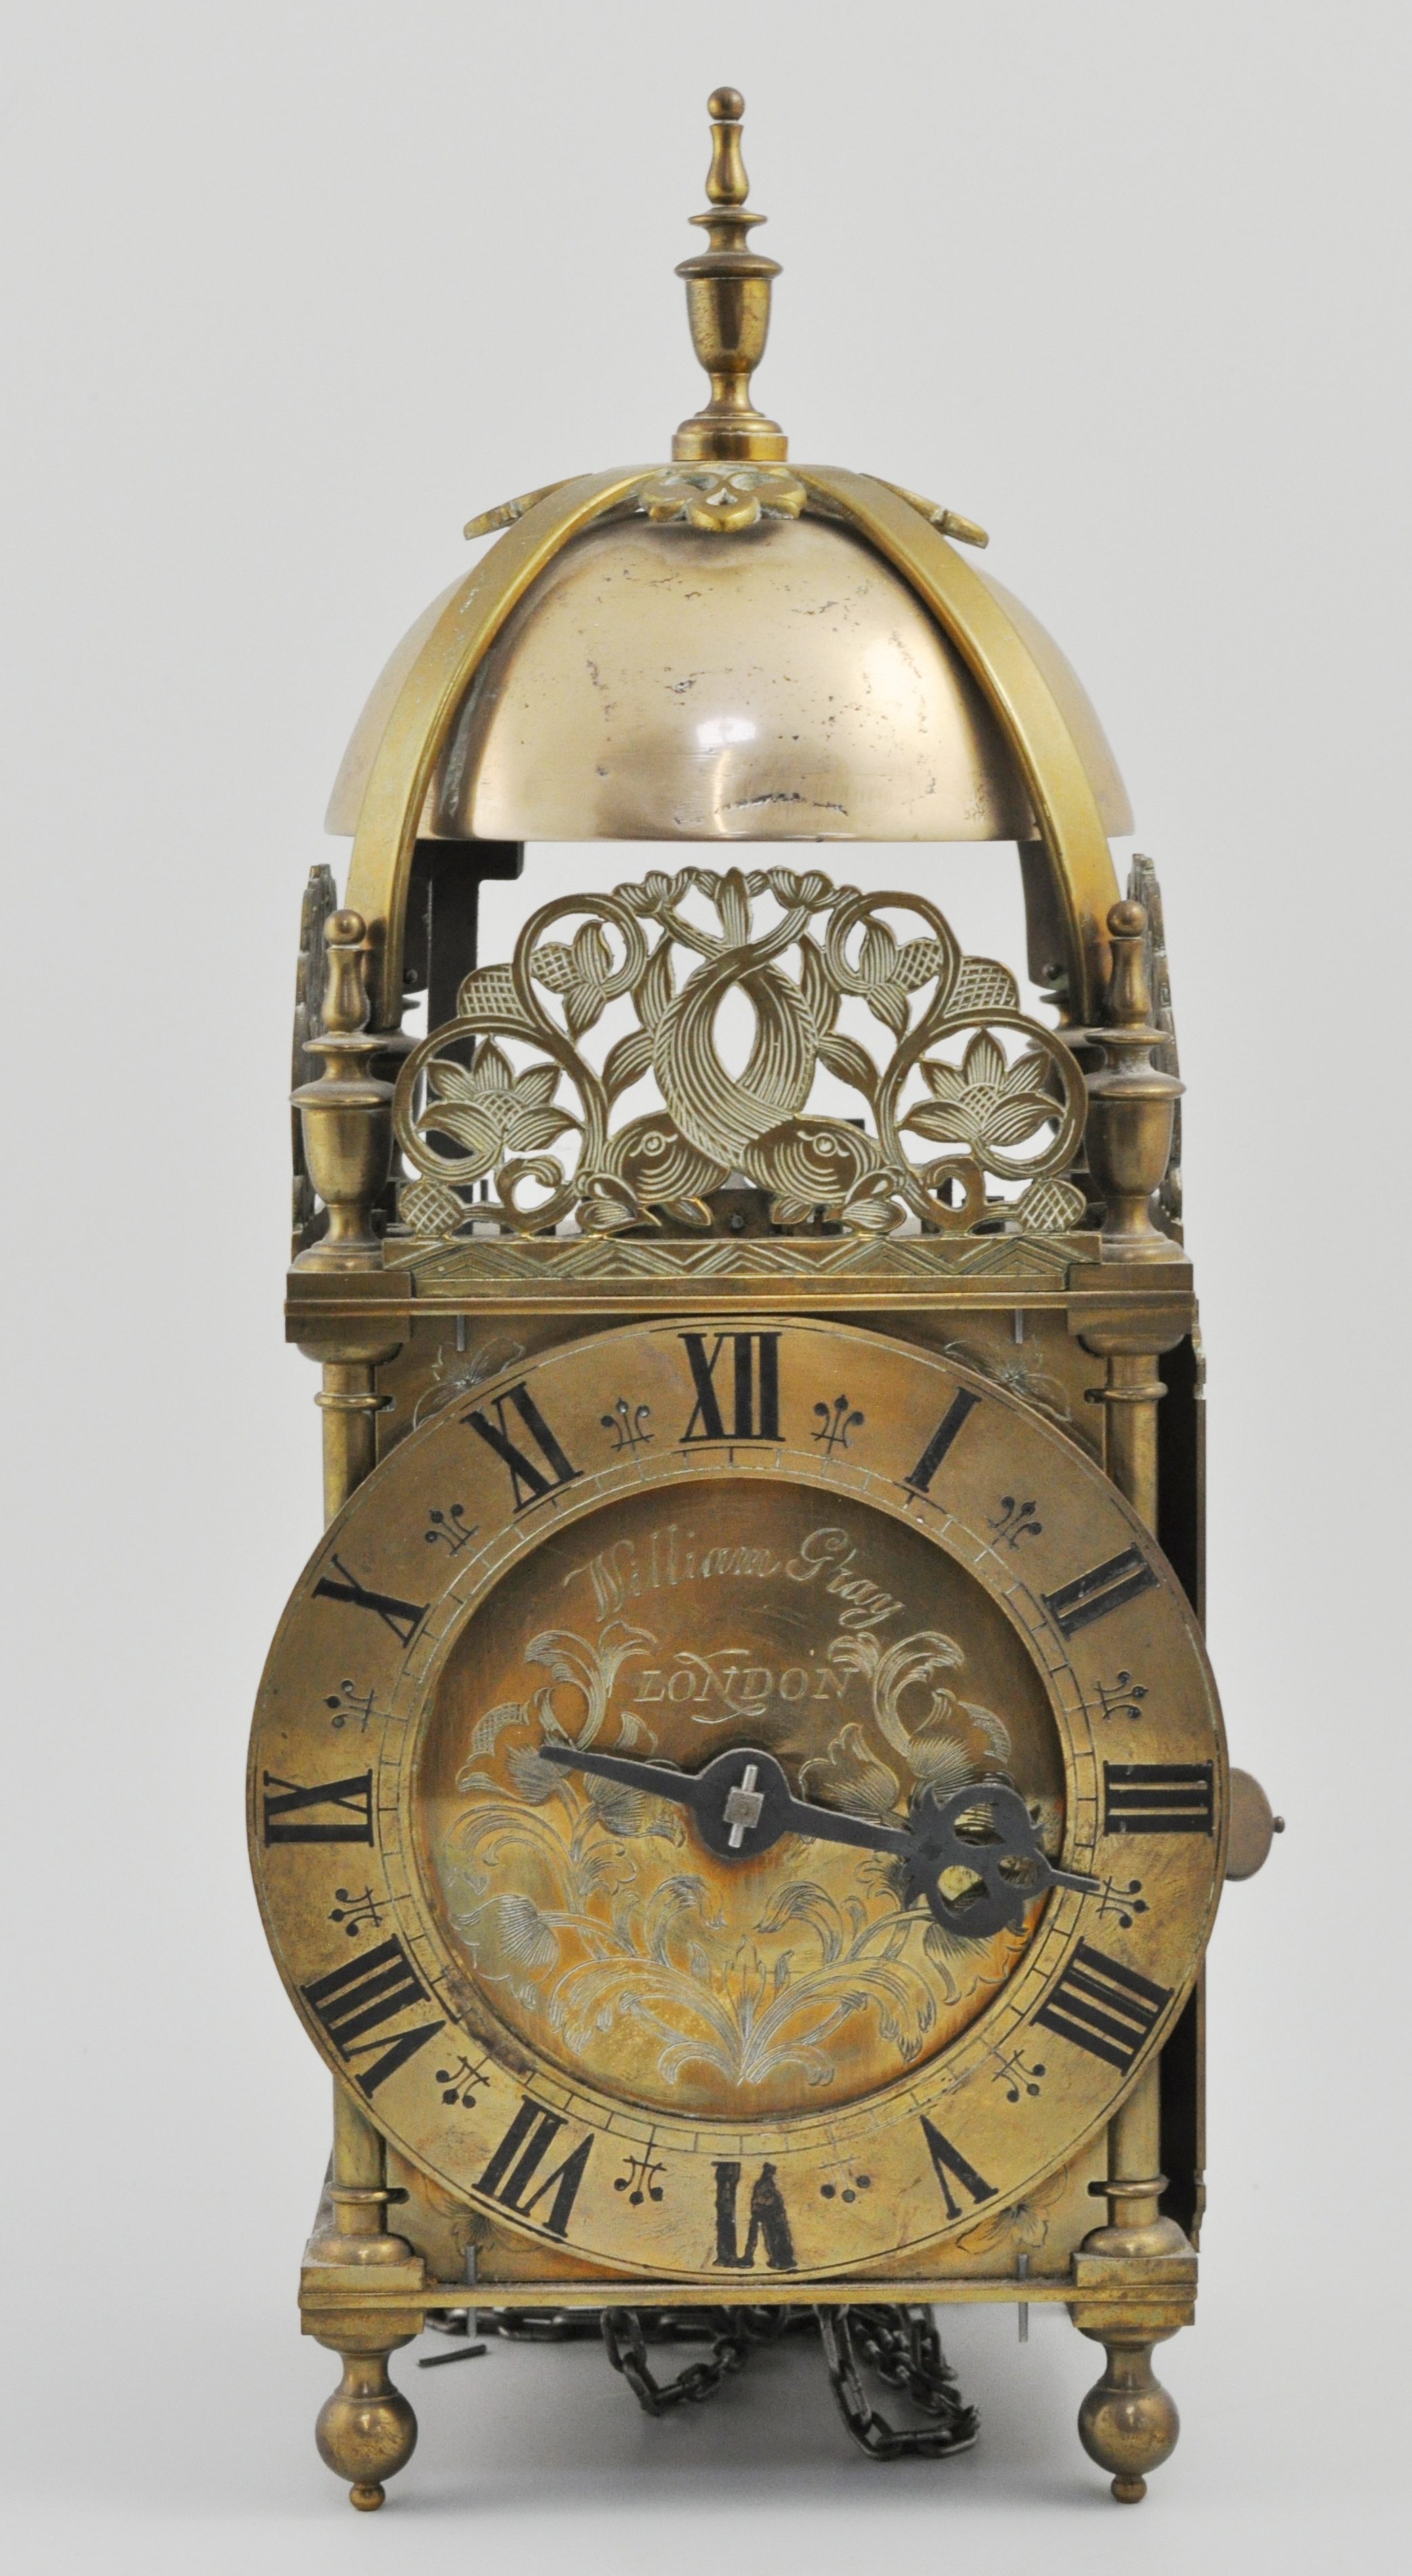 Brass striking lantern clock, 6" dial with Roman numerals,